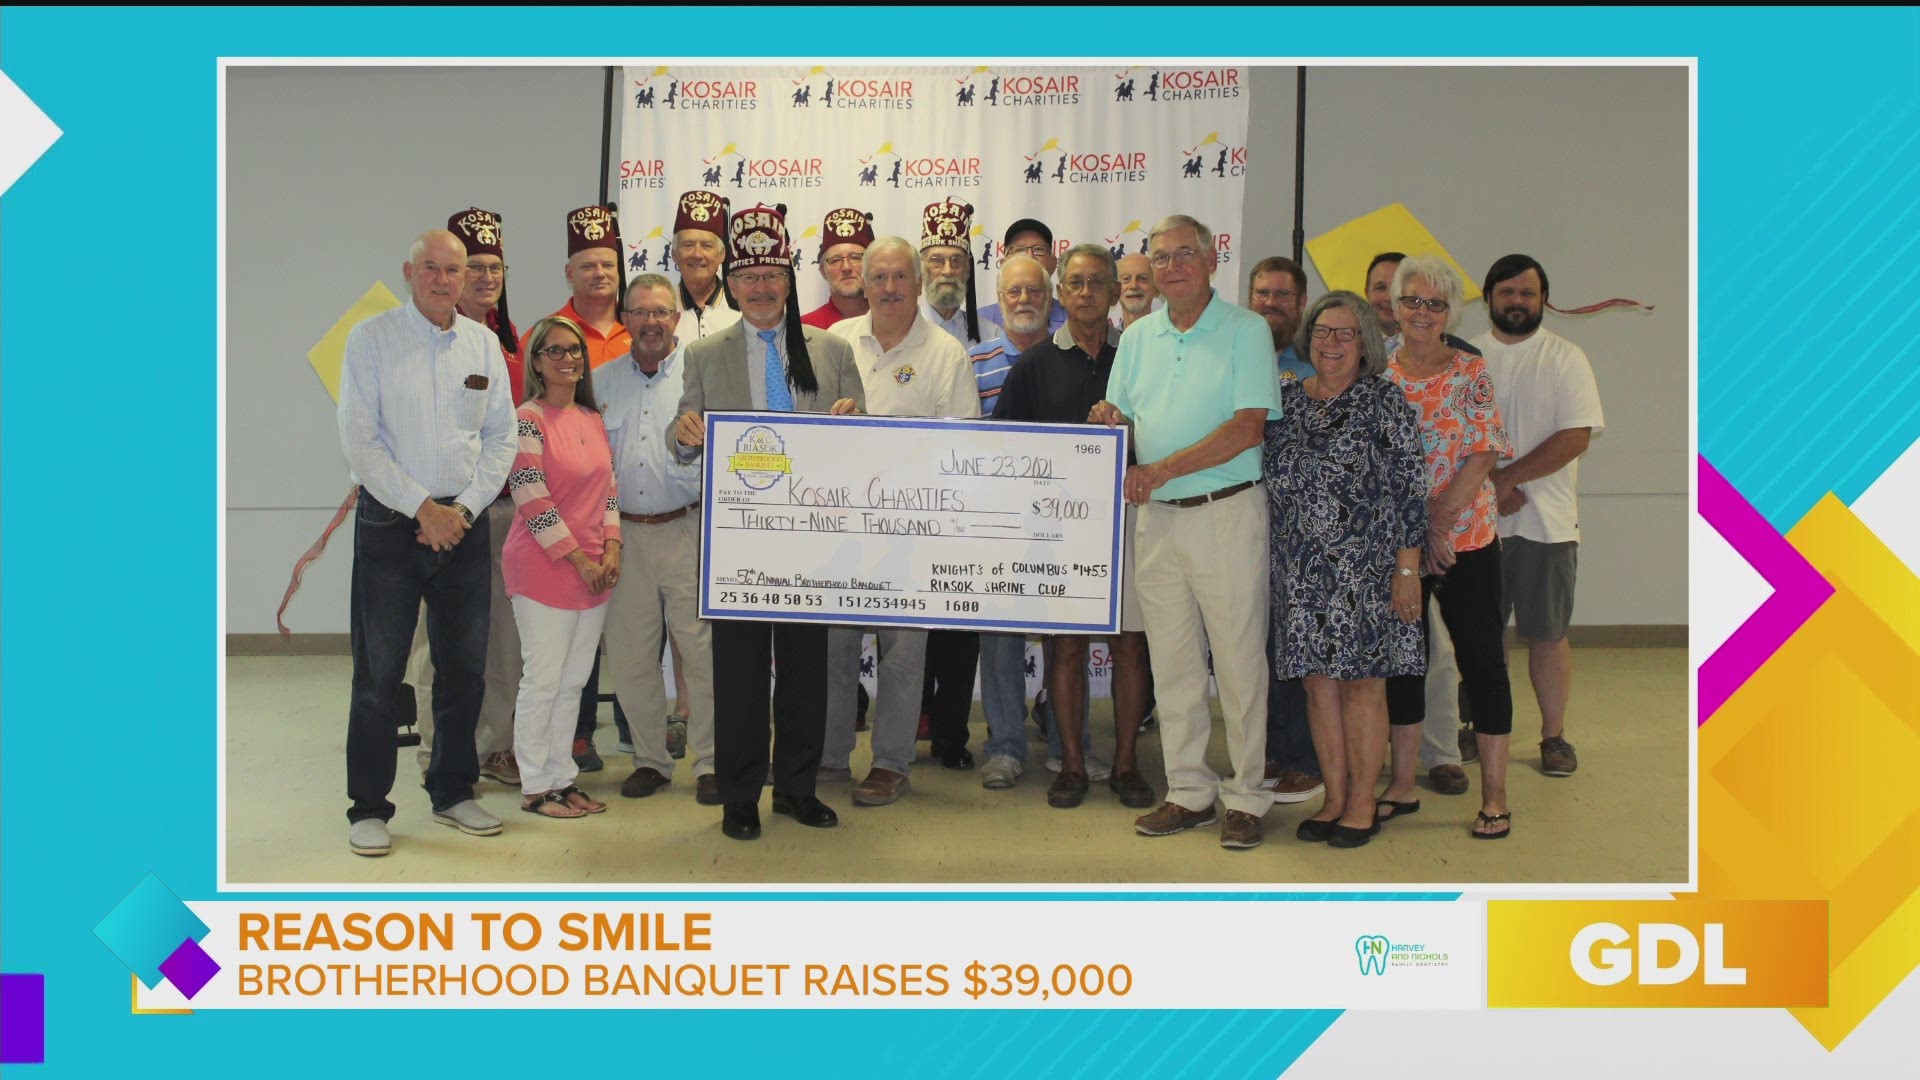 GDL: 56th Annual Brotherhood Banquet raises $39,000 to help Kosair Kids